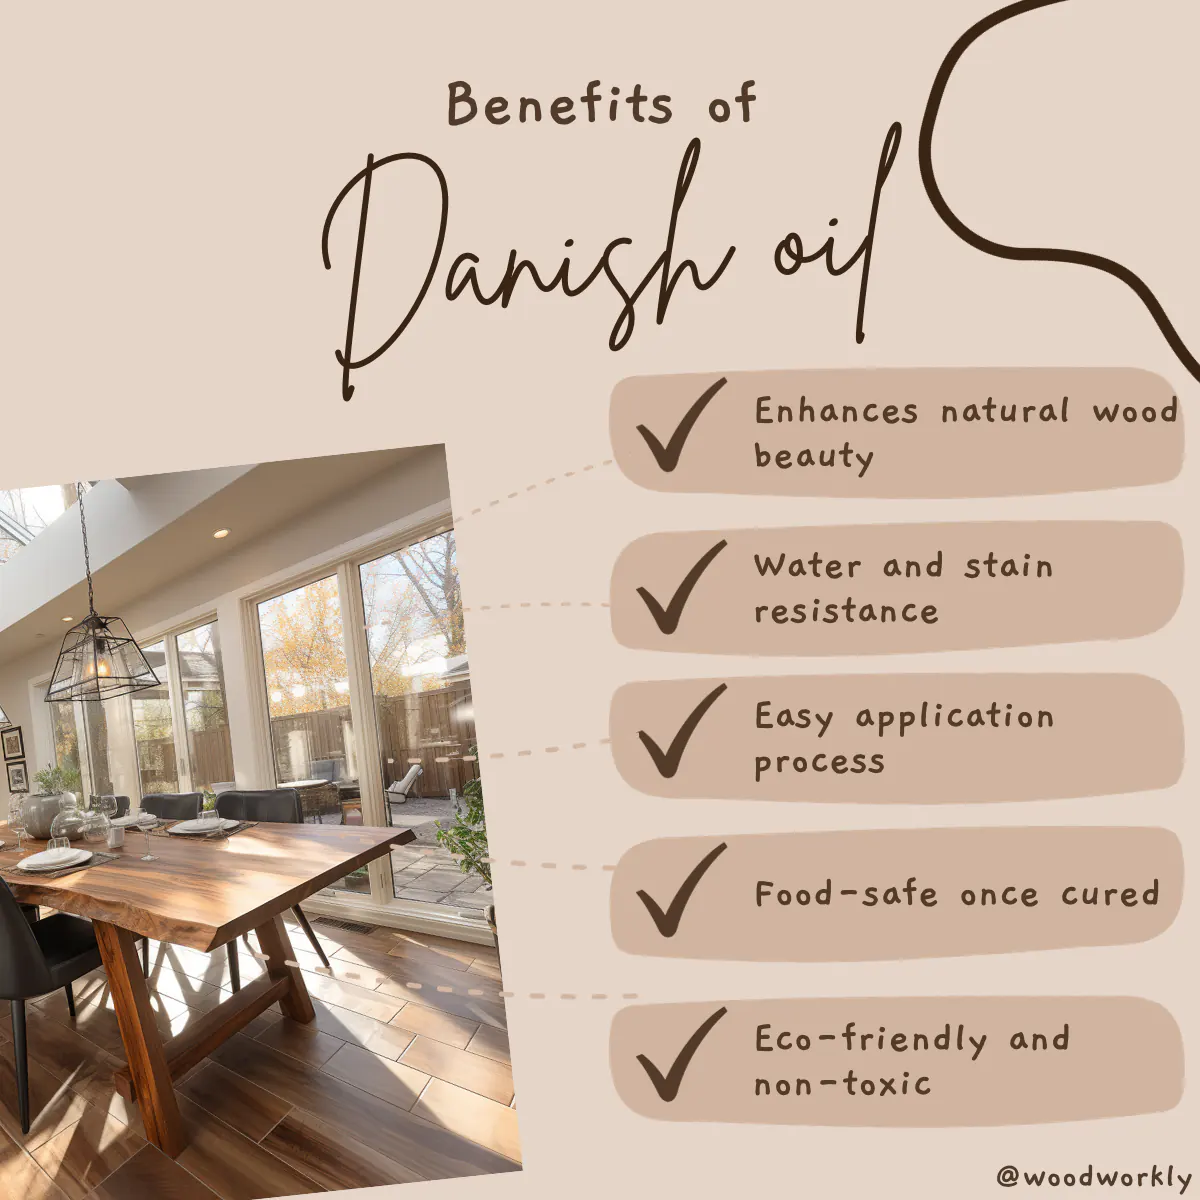 Benefits of Danish oi